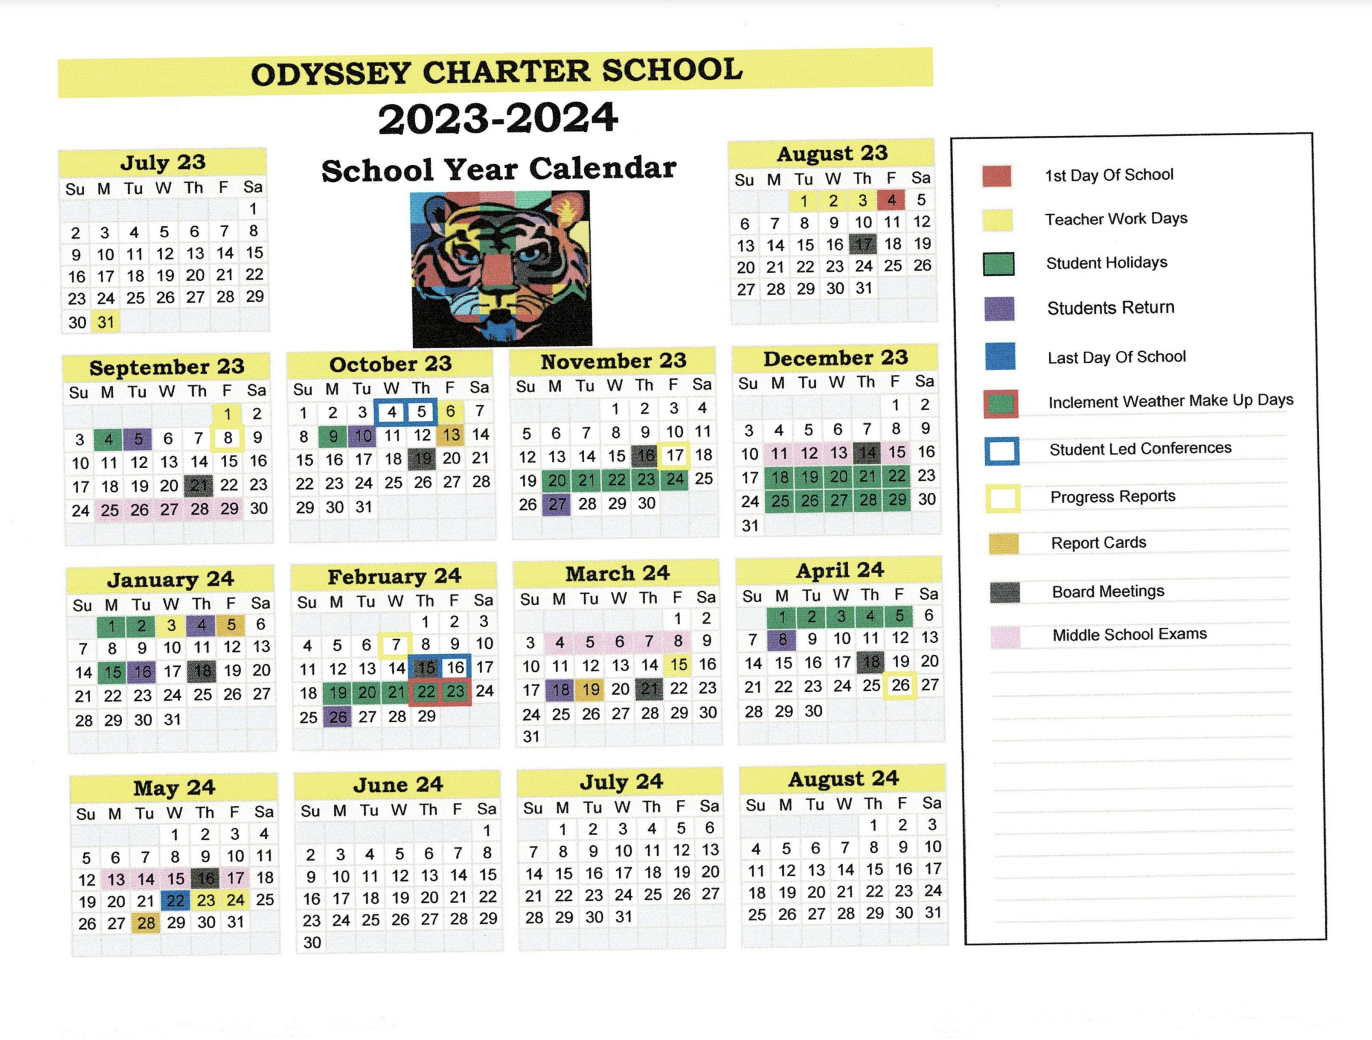 calendar-odyssey-charter-school